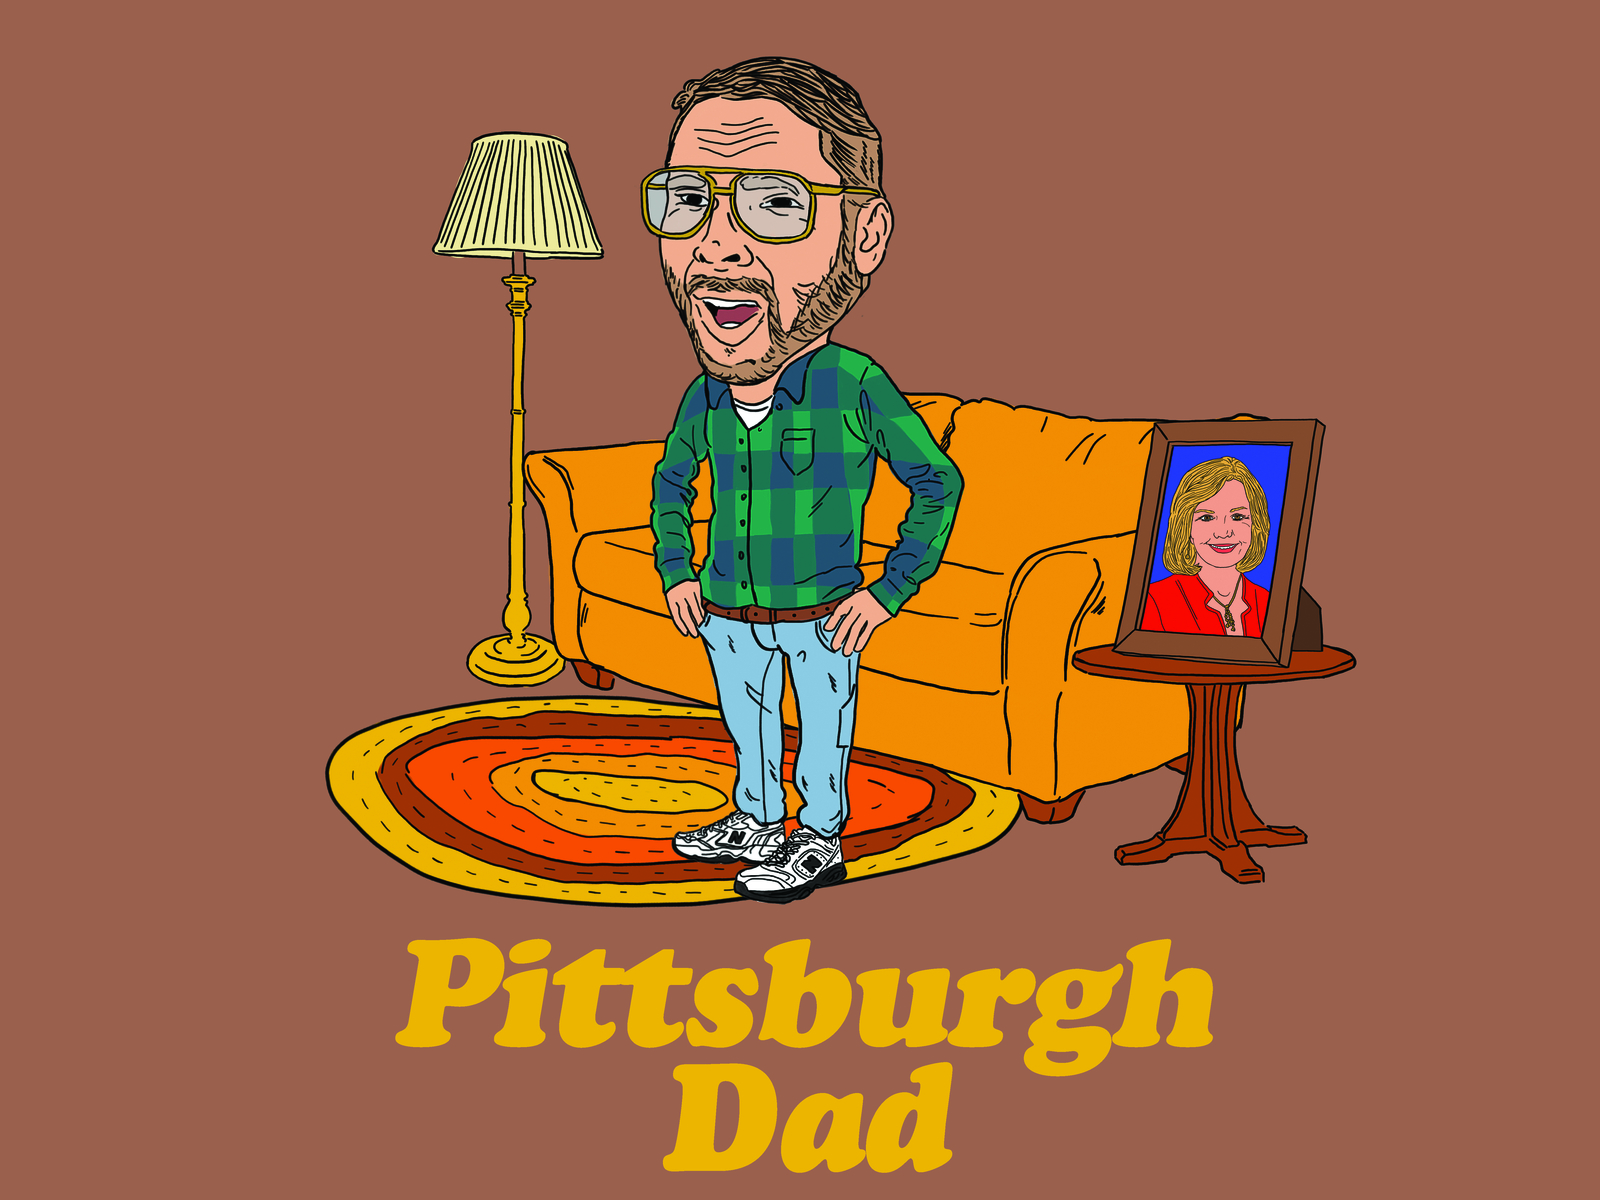 Pittsburgh Dad by Dan Corcoran on Dribbble